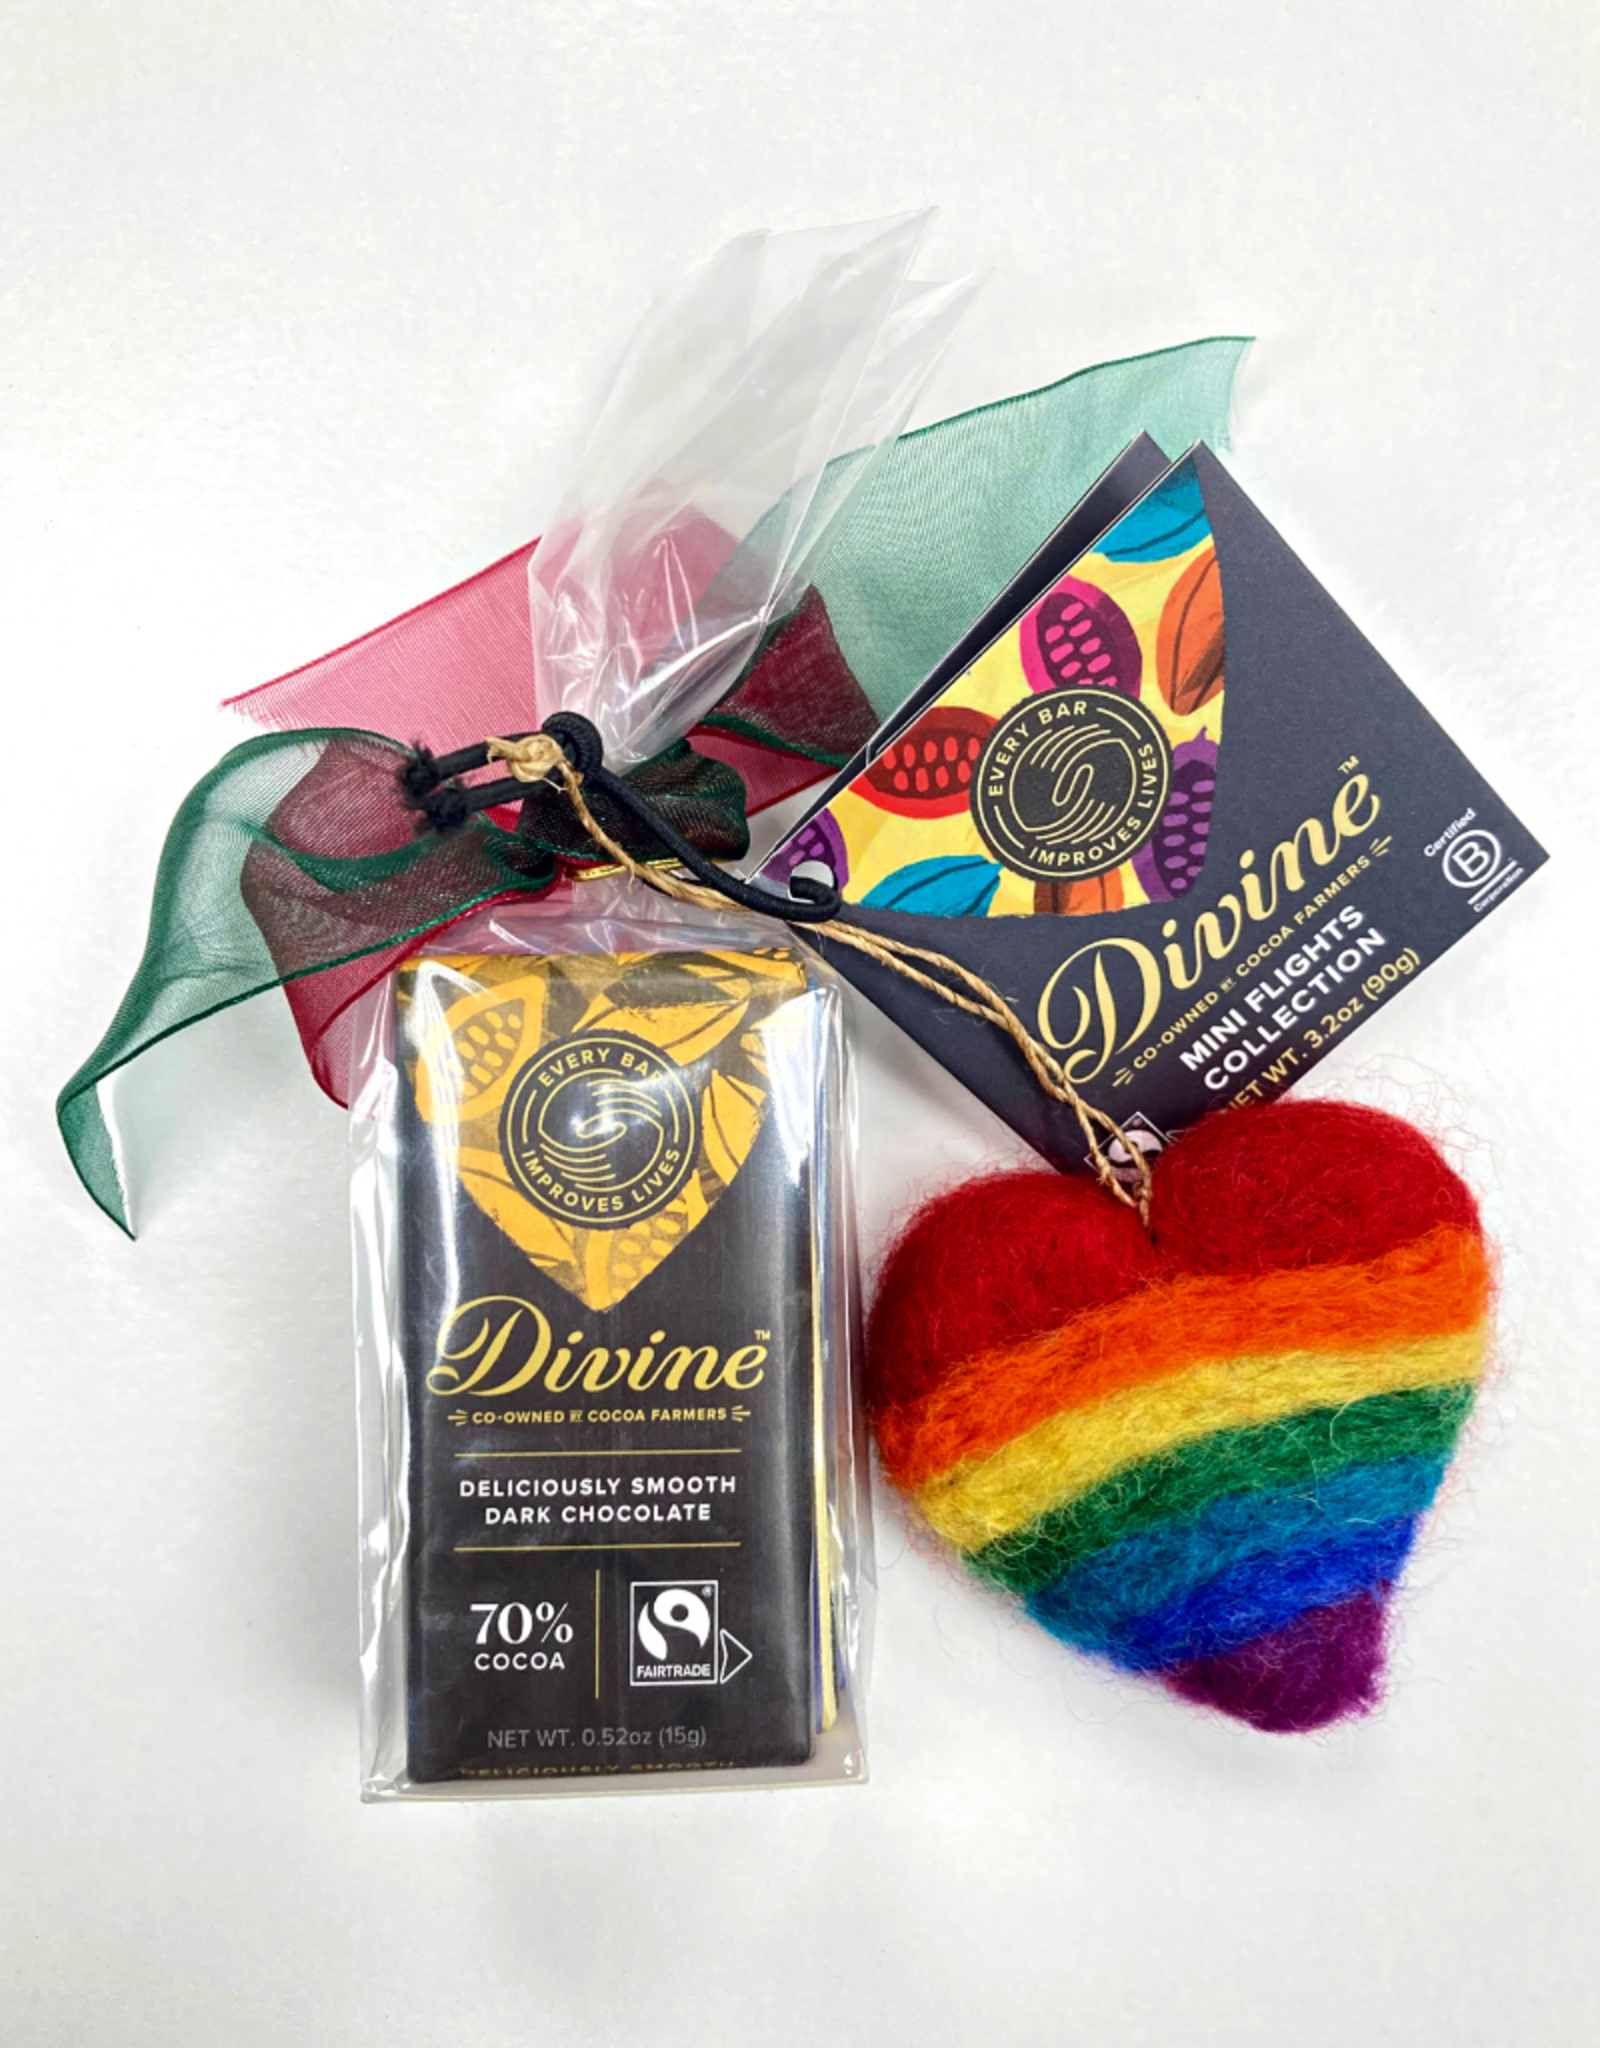 Rainbow Heart Chocolate Sampler